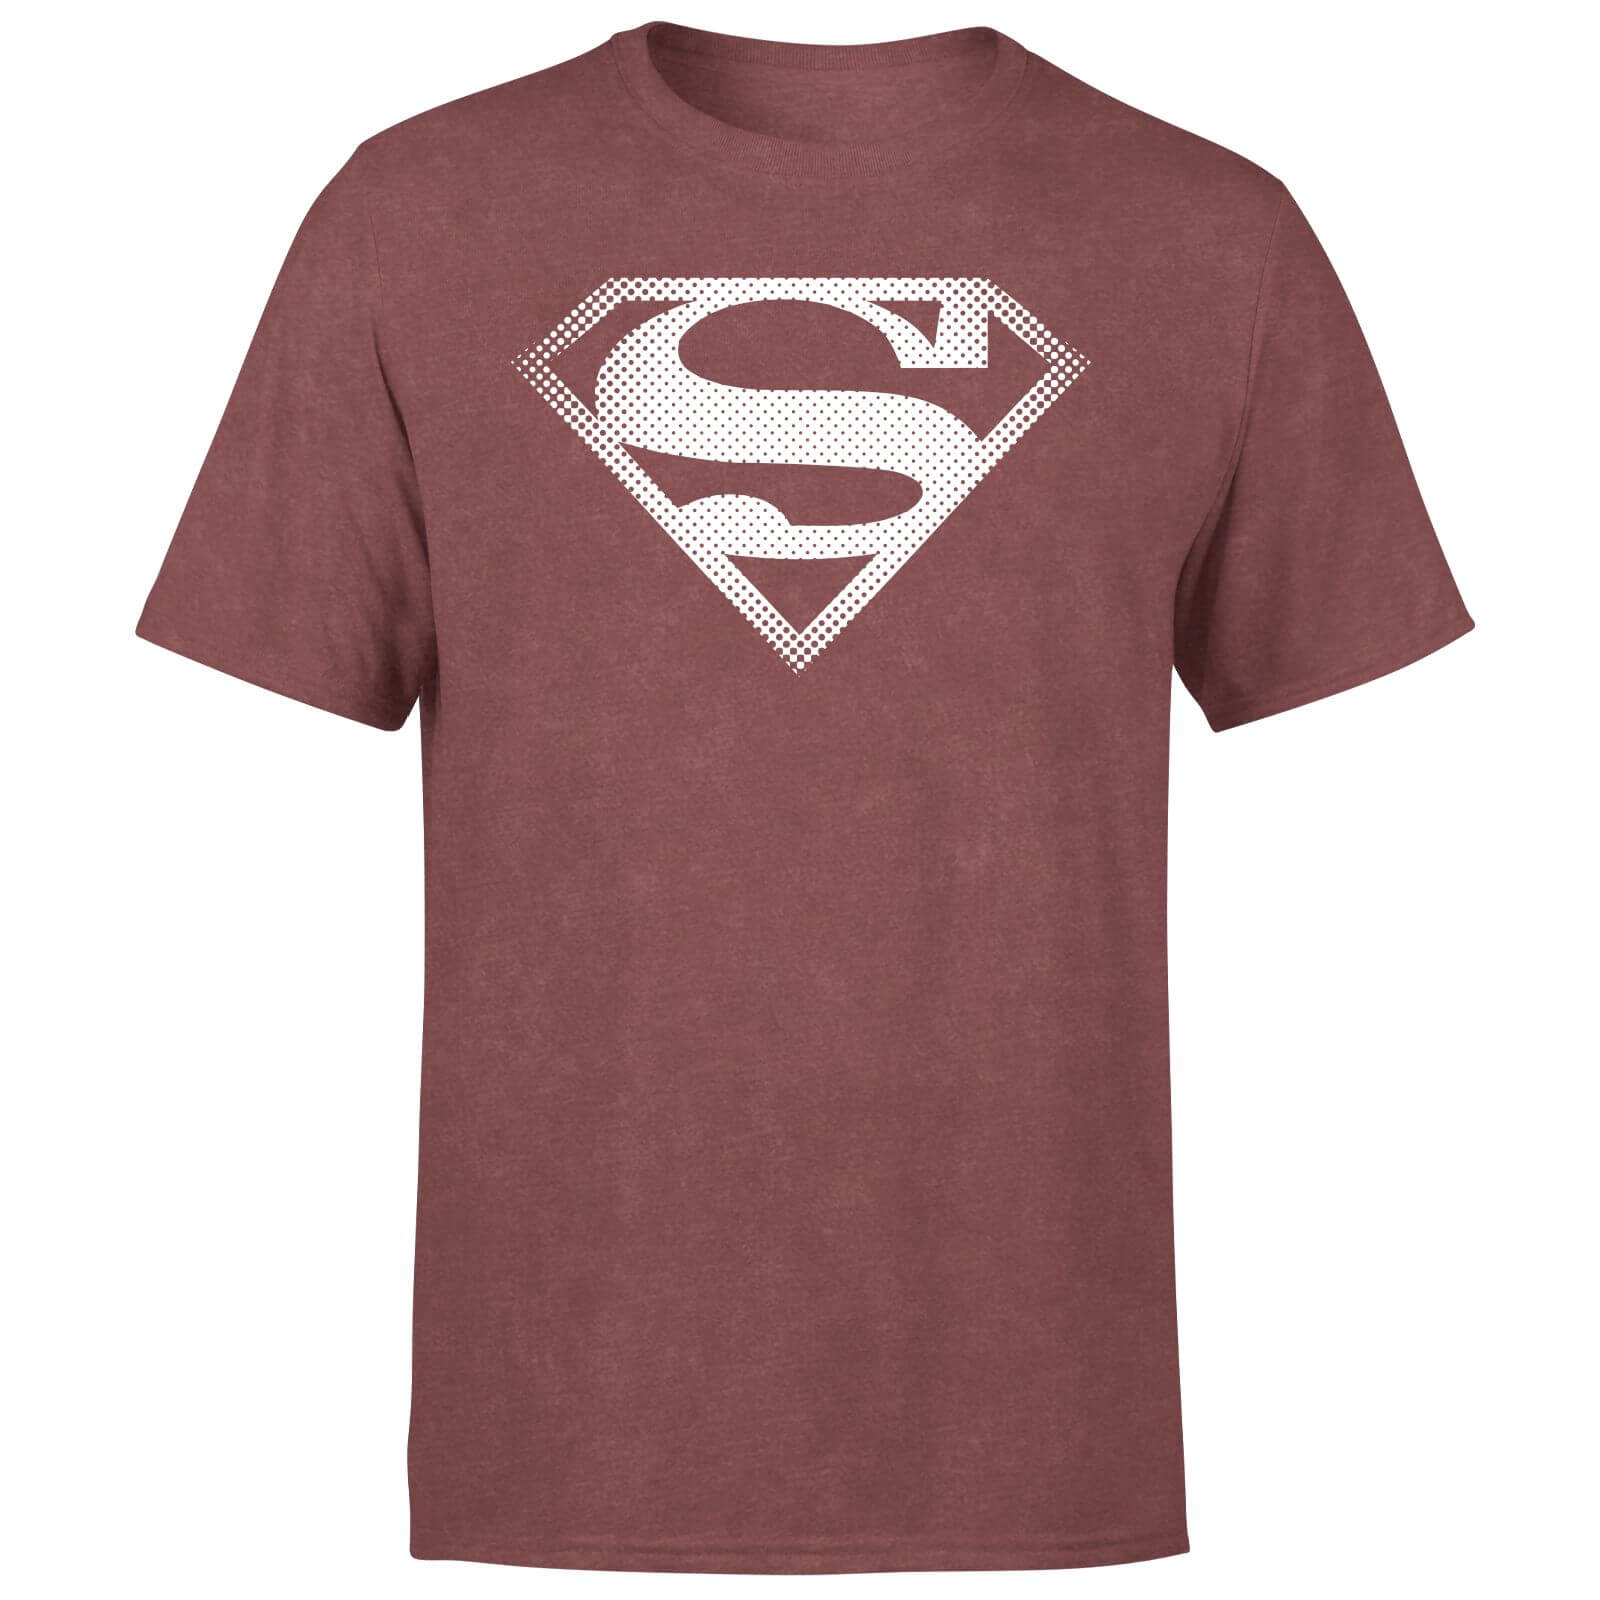 Superman Spot Logo Men's T-Shirt - Burgundy Acid Wash - L - Burgundy Acid Wash